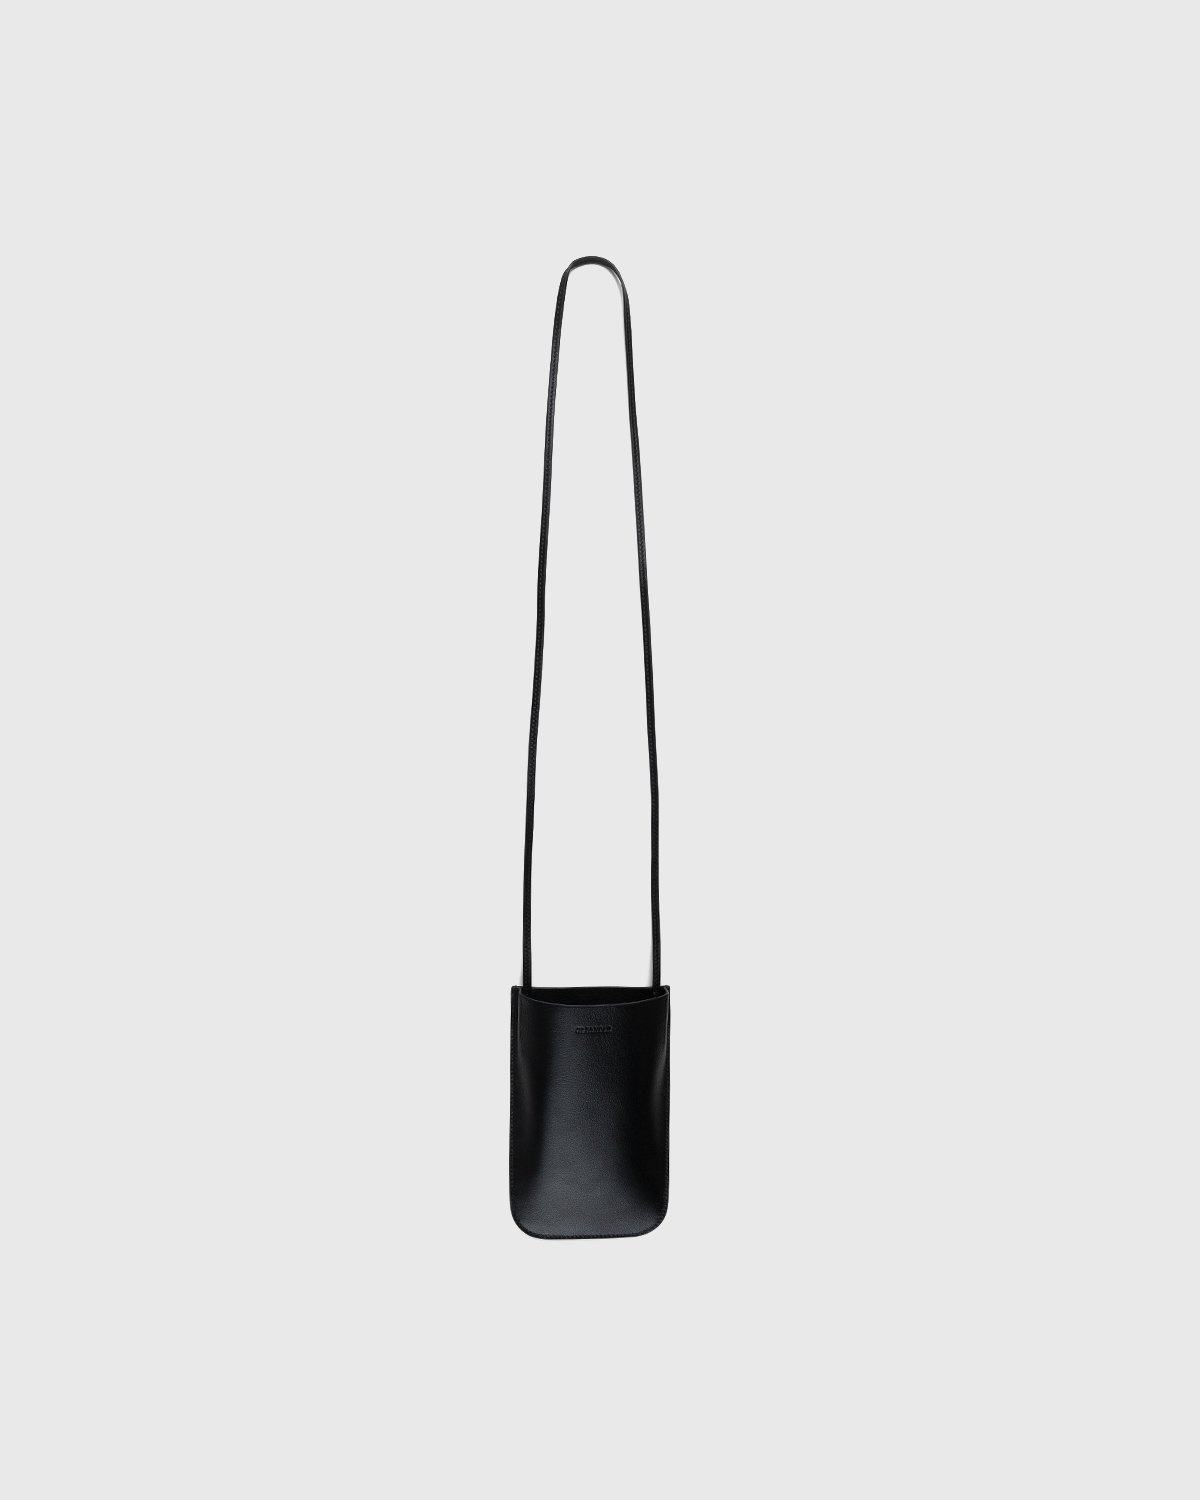 Jil Sander - Leather Phone Holder Pouch Black - Lifestyle - Black - Image 1